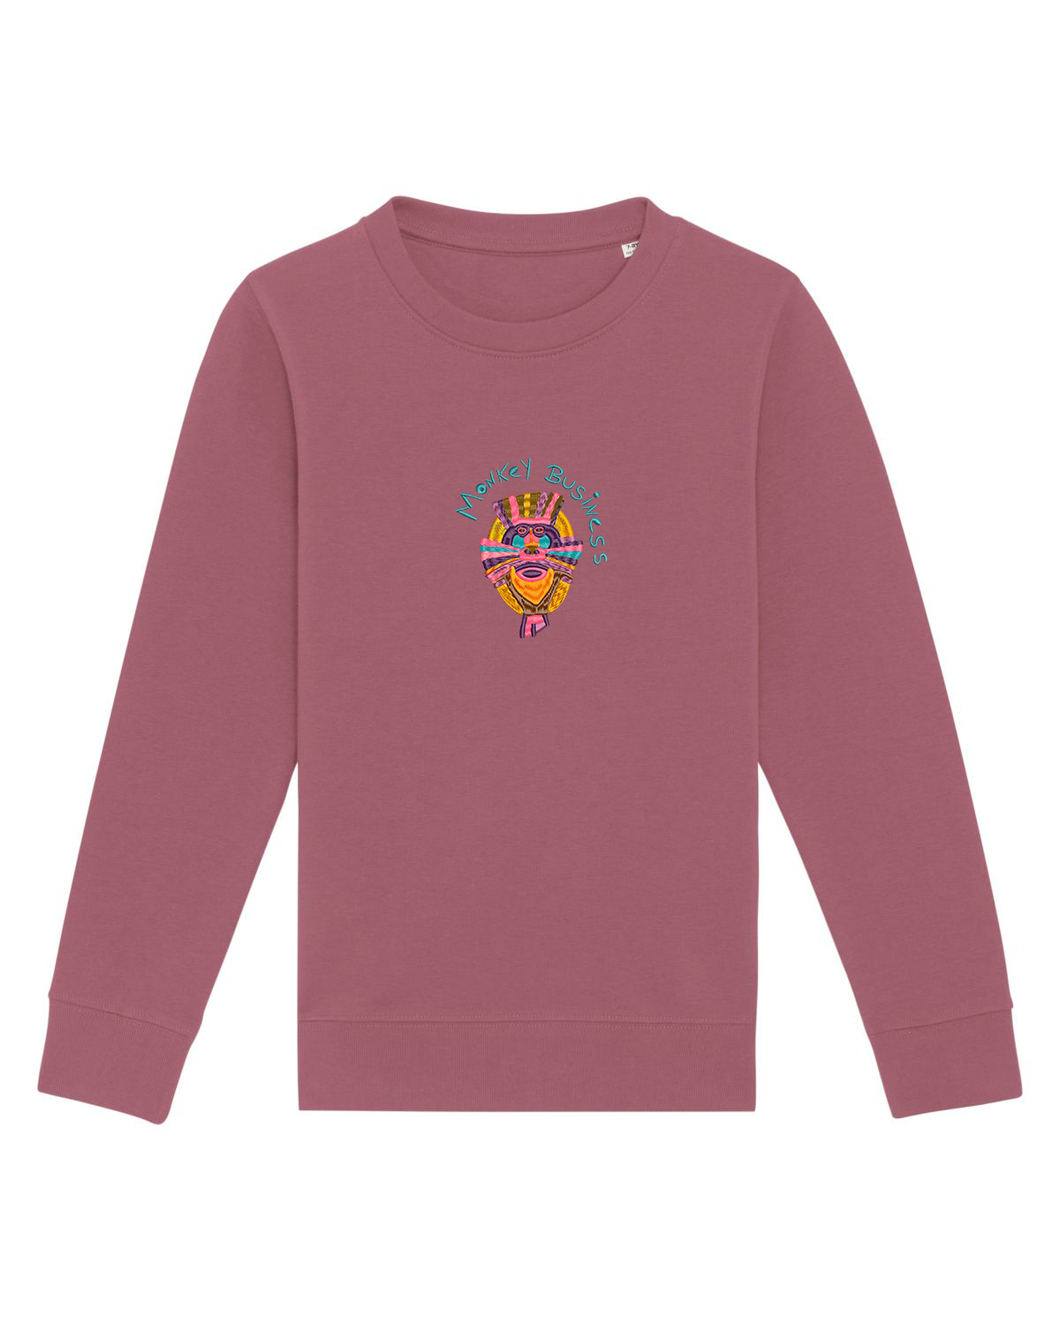 Monkey business 🐵- Embroidered KIDS Sweatshirt